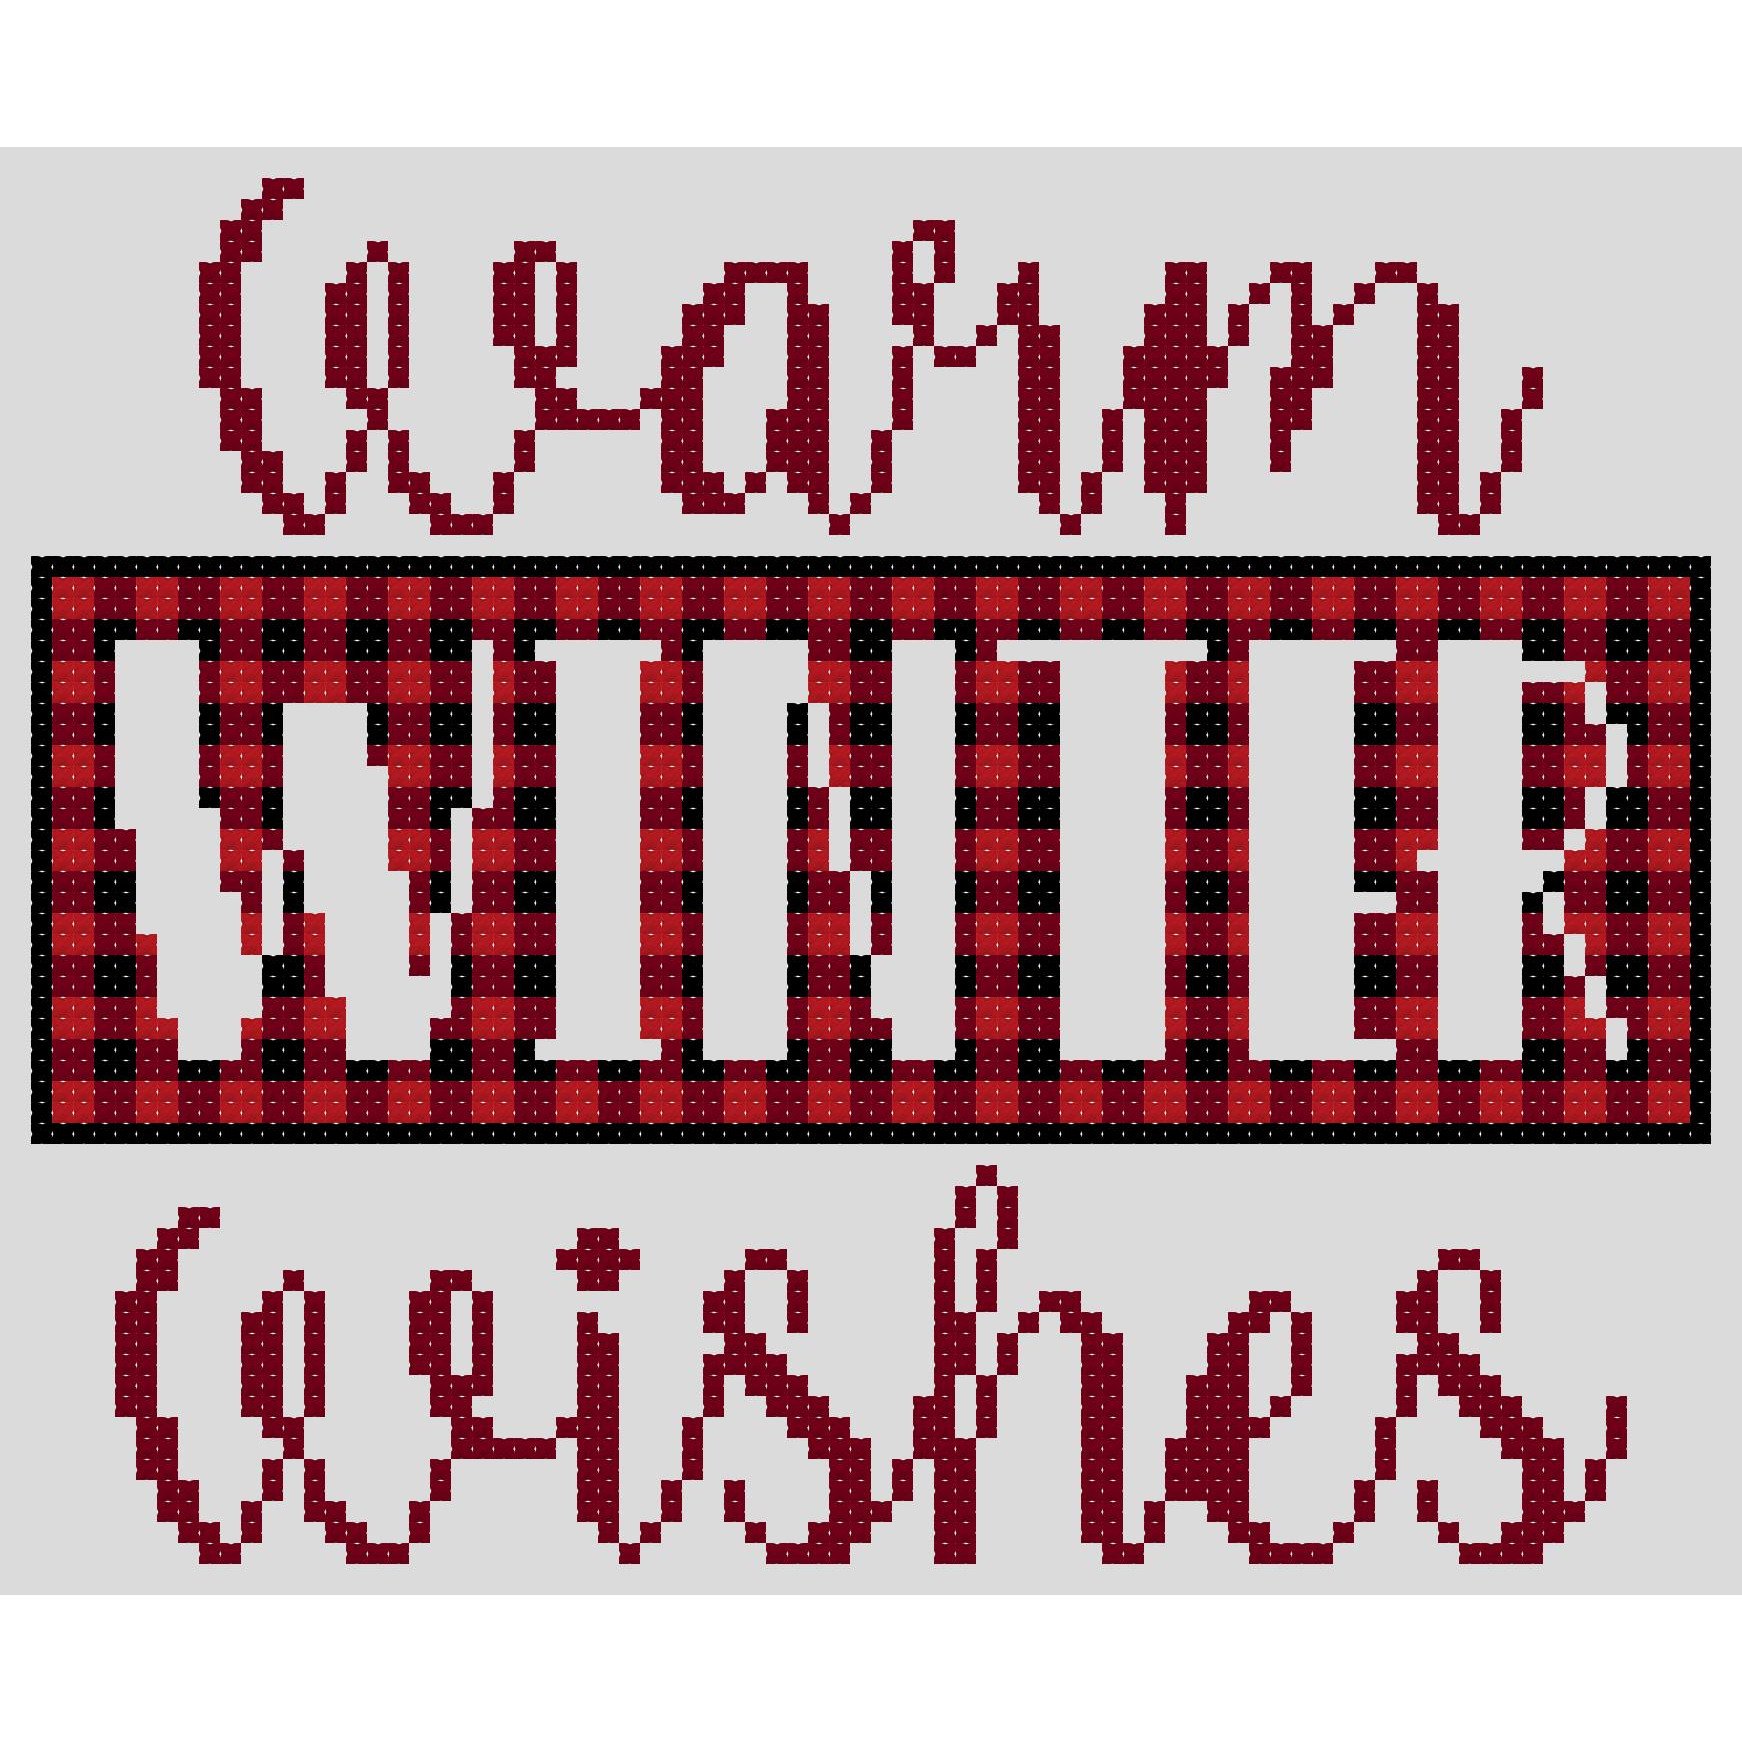 Warm Winter Wishes  |  Stitch Count: 80 x 66